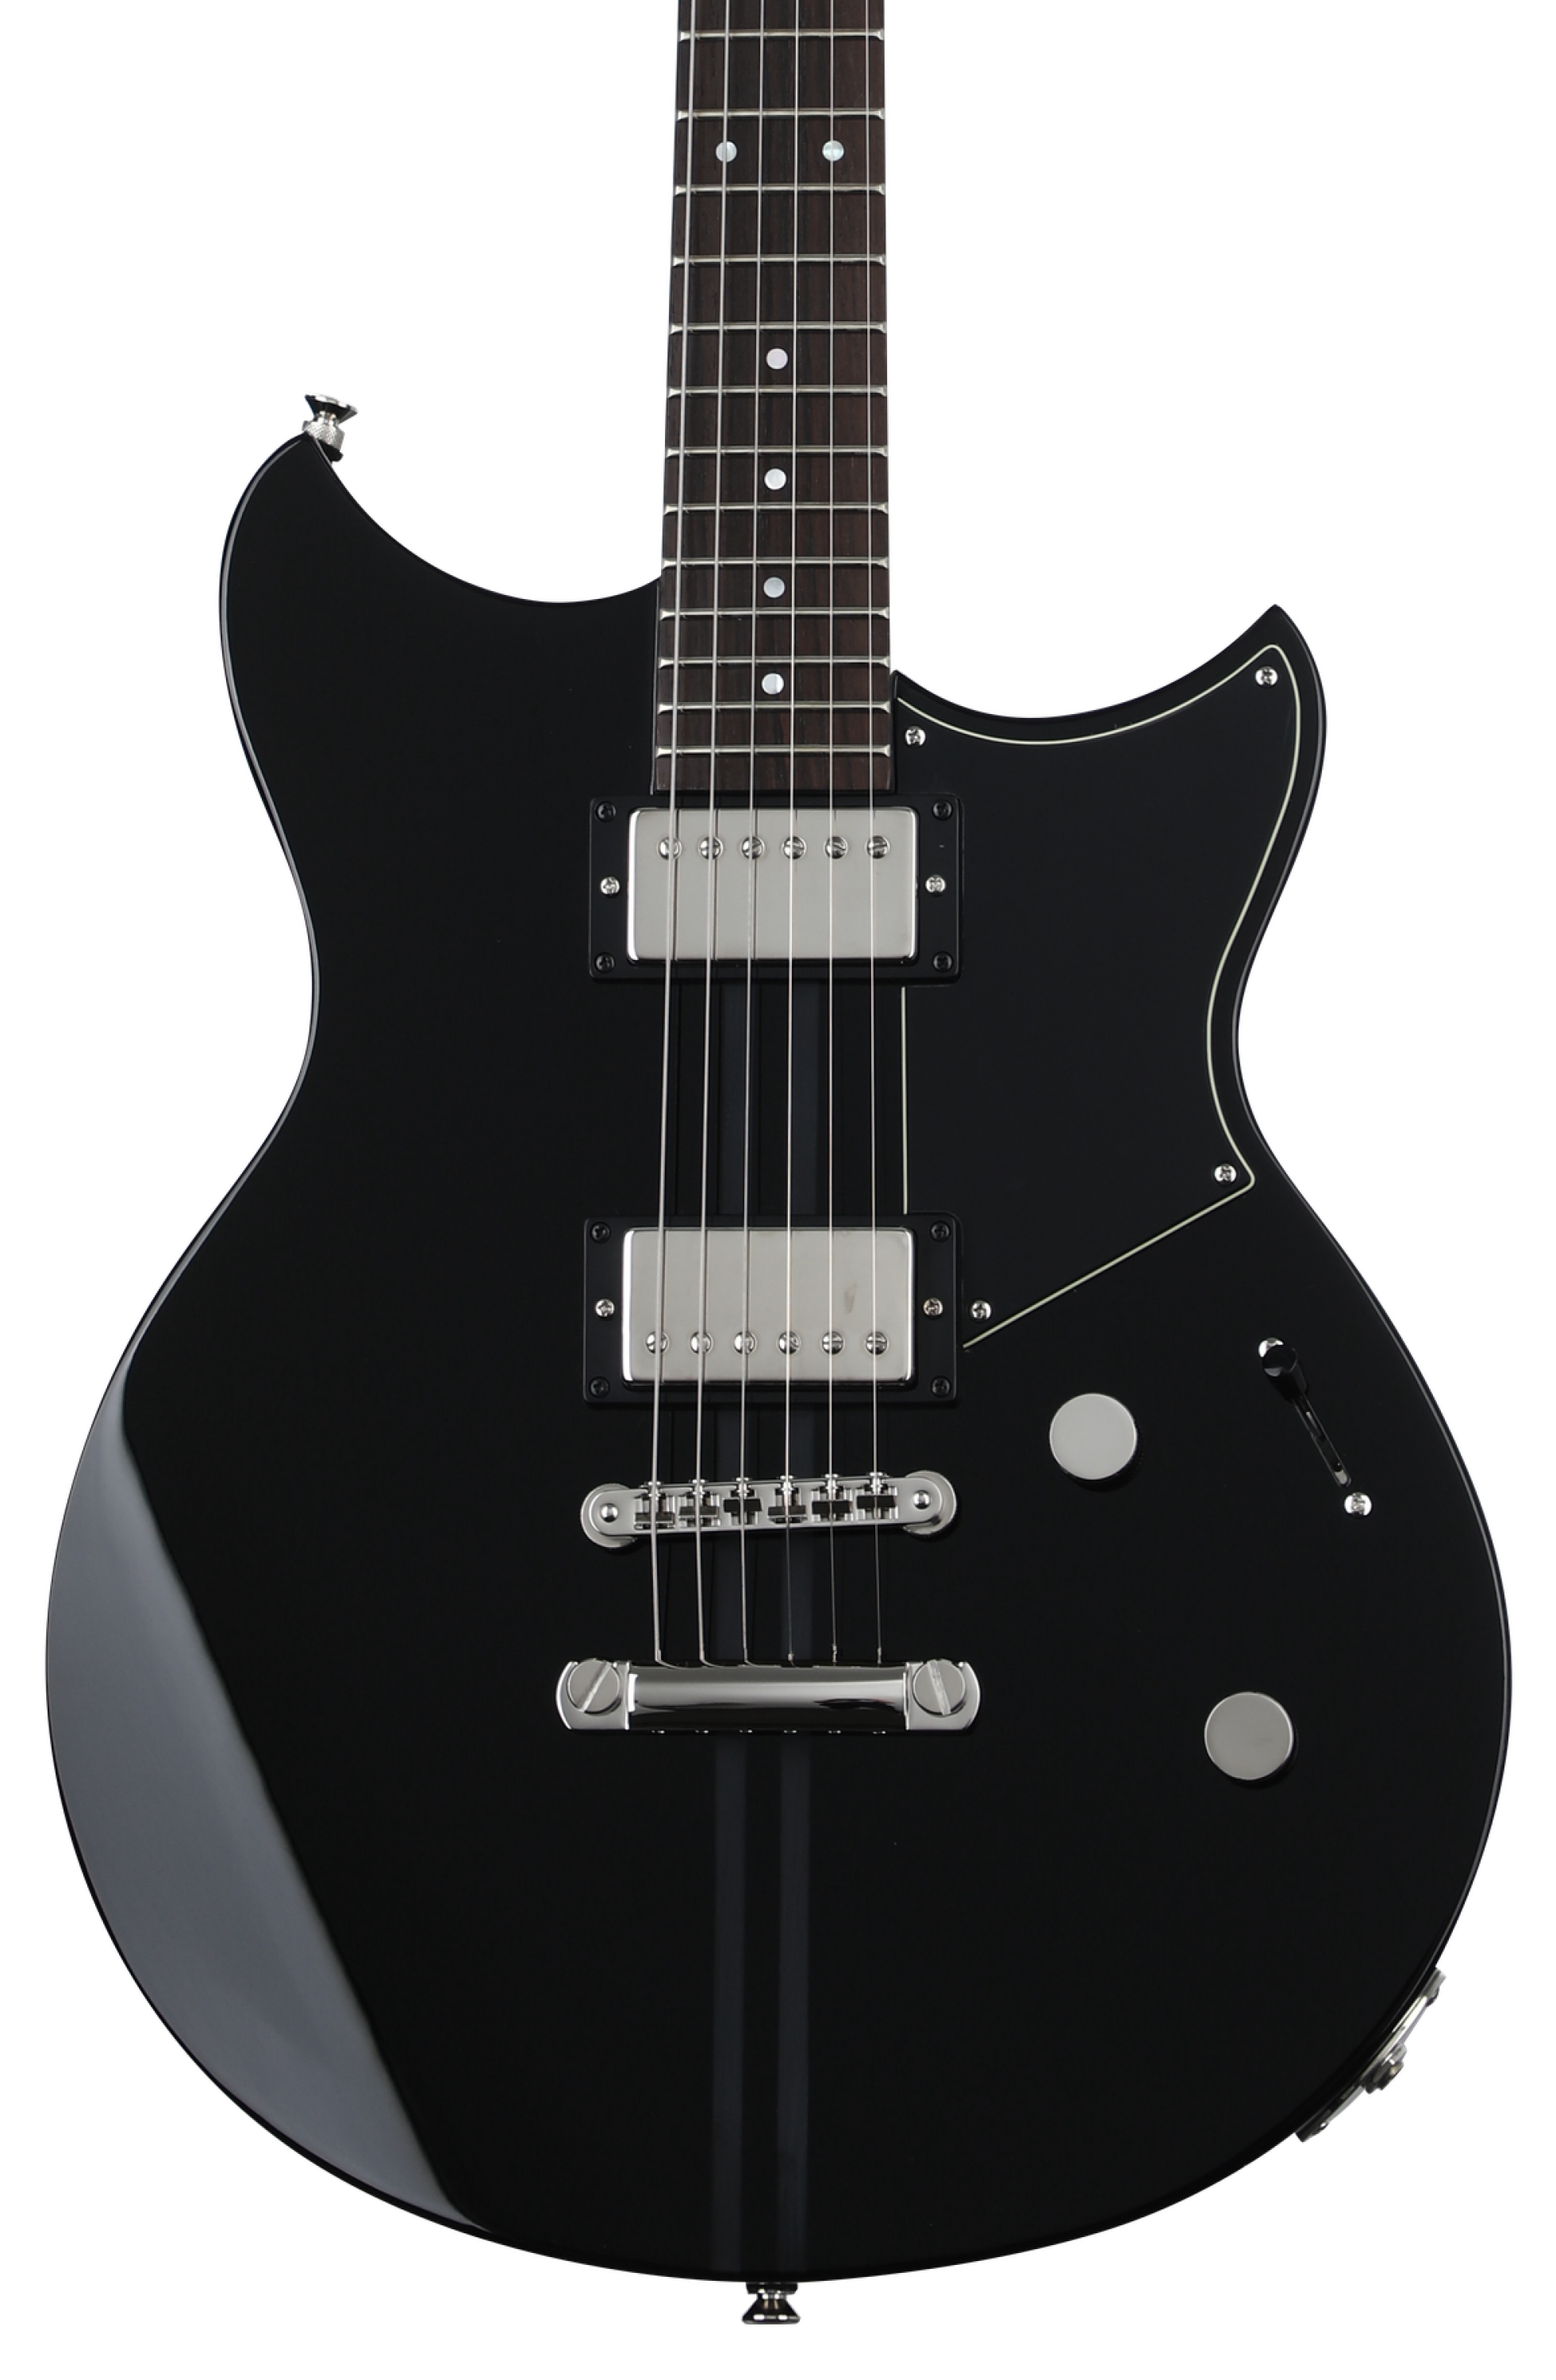 Yamaha Revstar Element RSE20 Electric Guitar - Black | Sweetwater